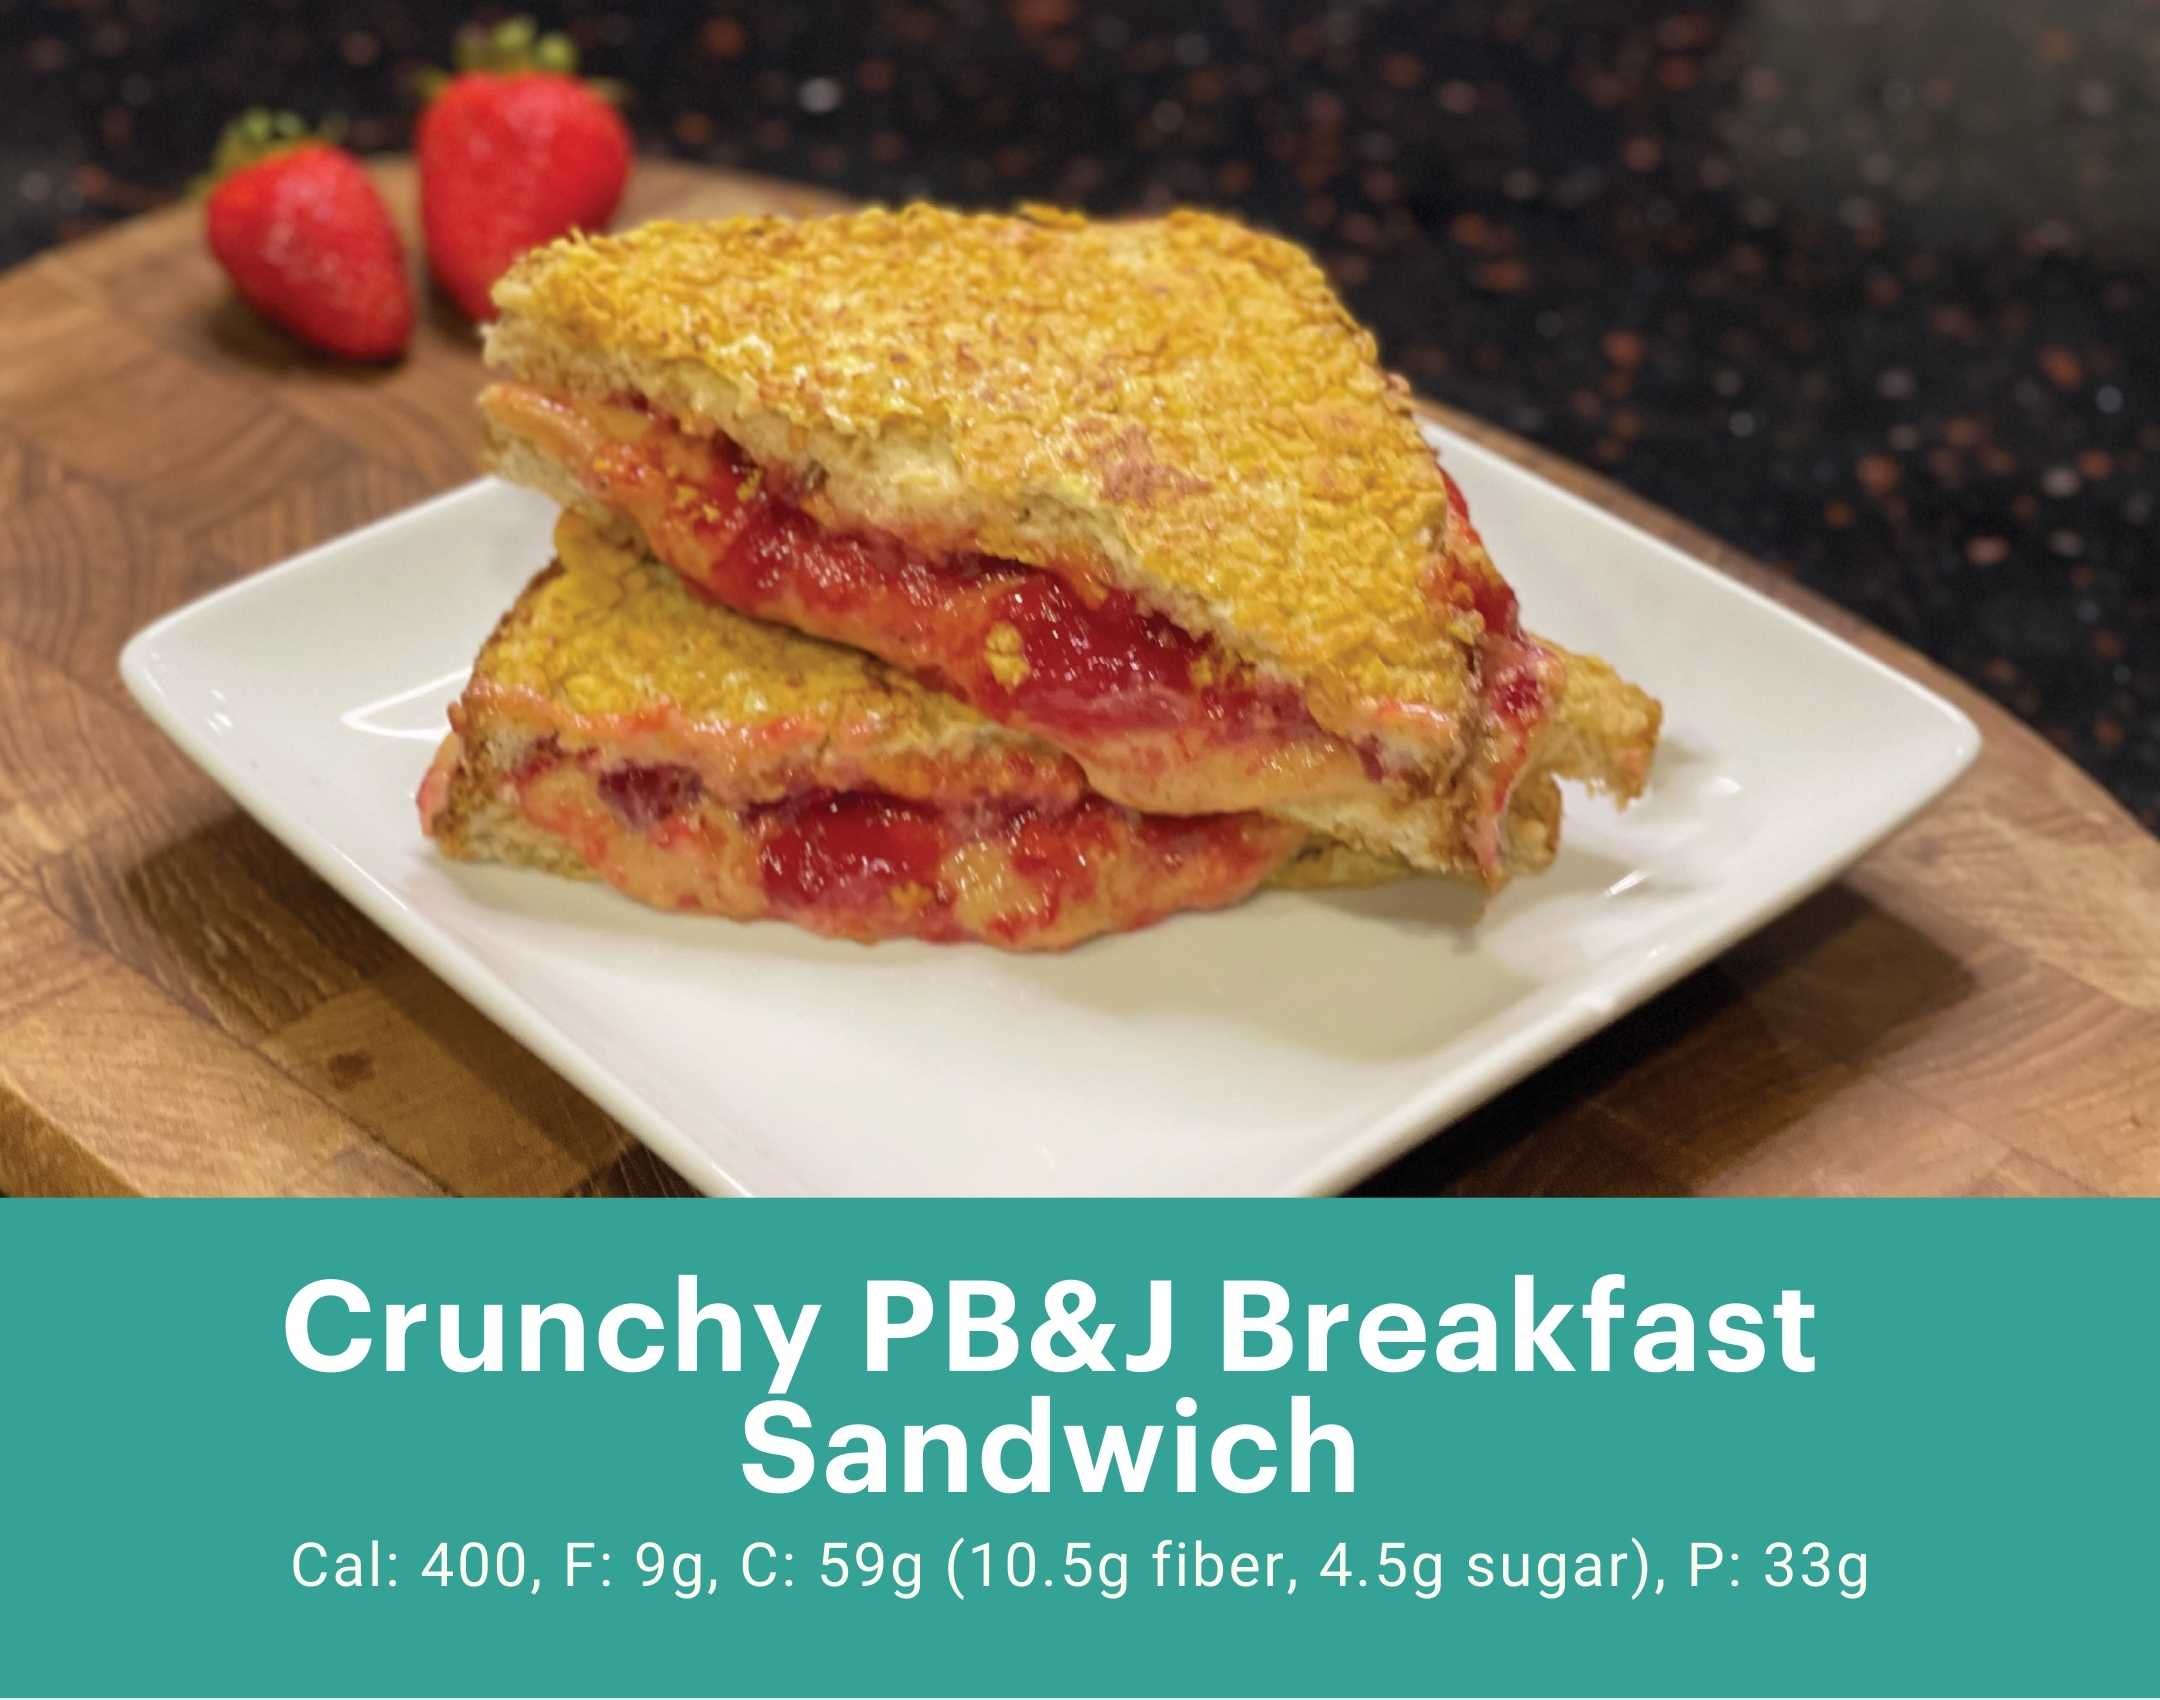 Crunchy PB&J Breakfast Sandwich.jpg